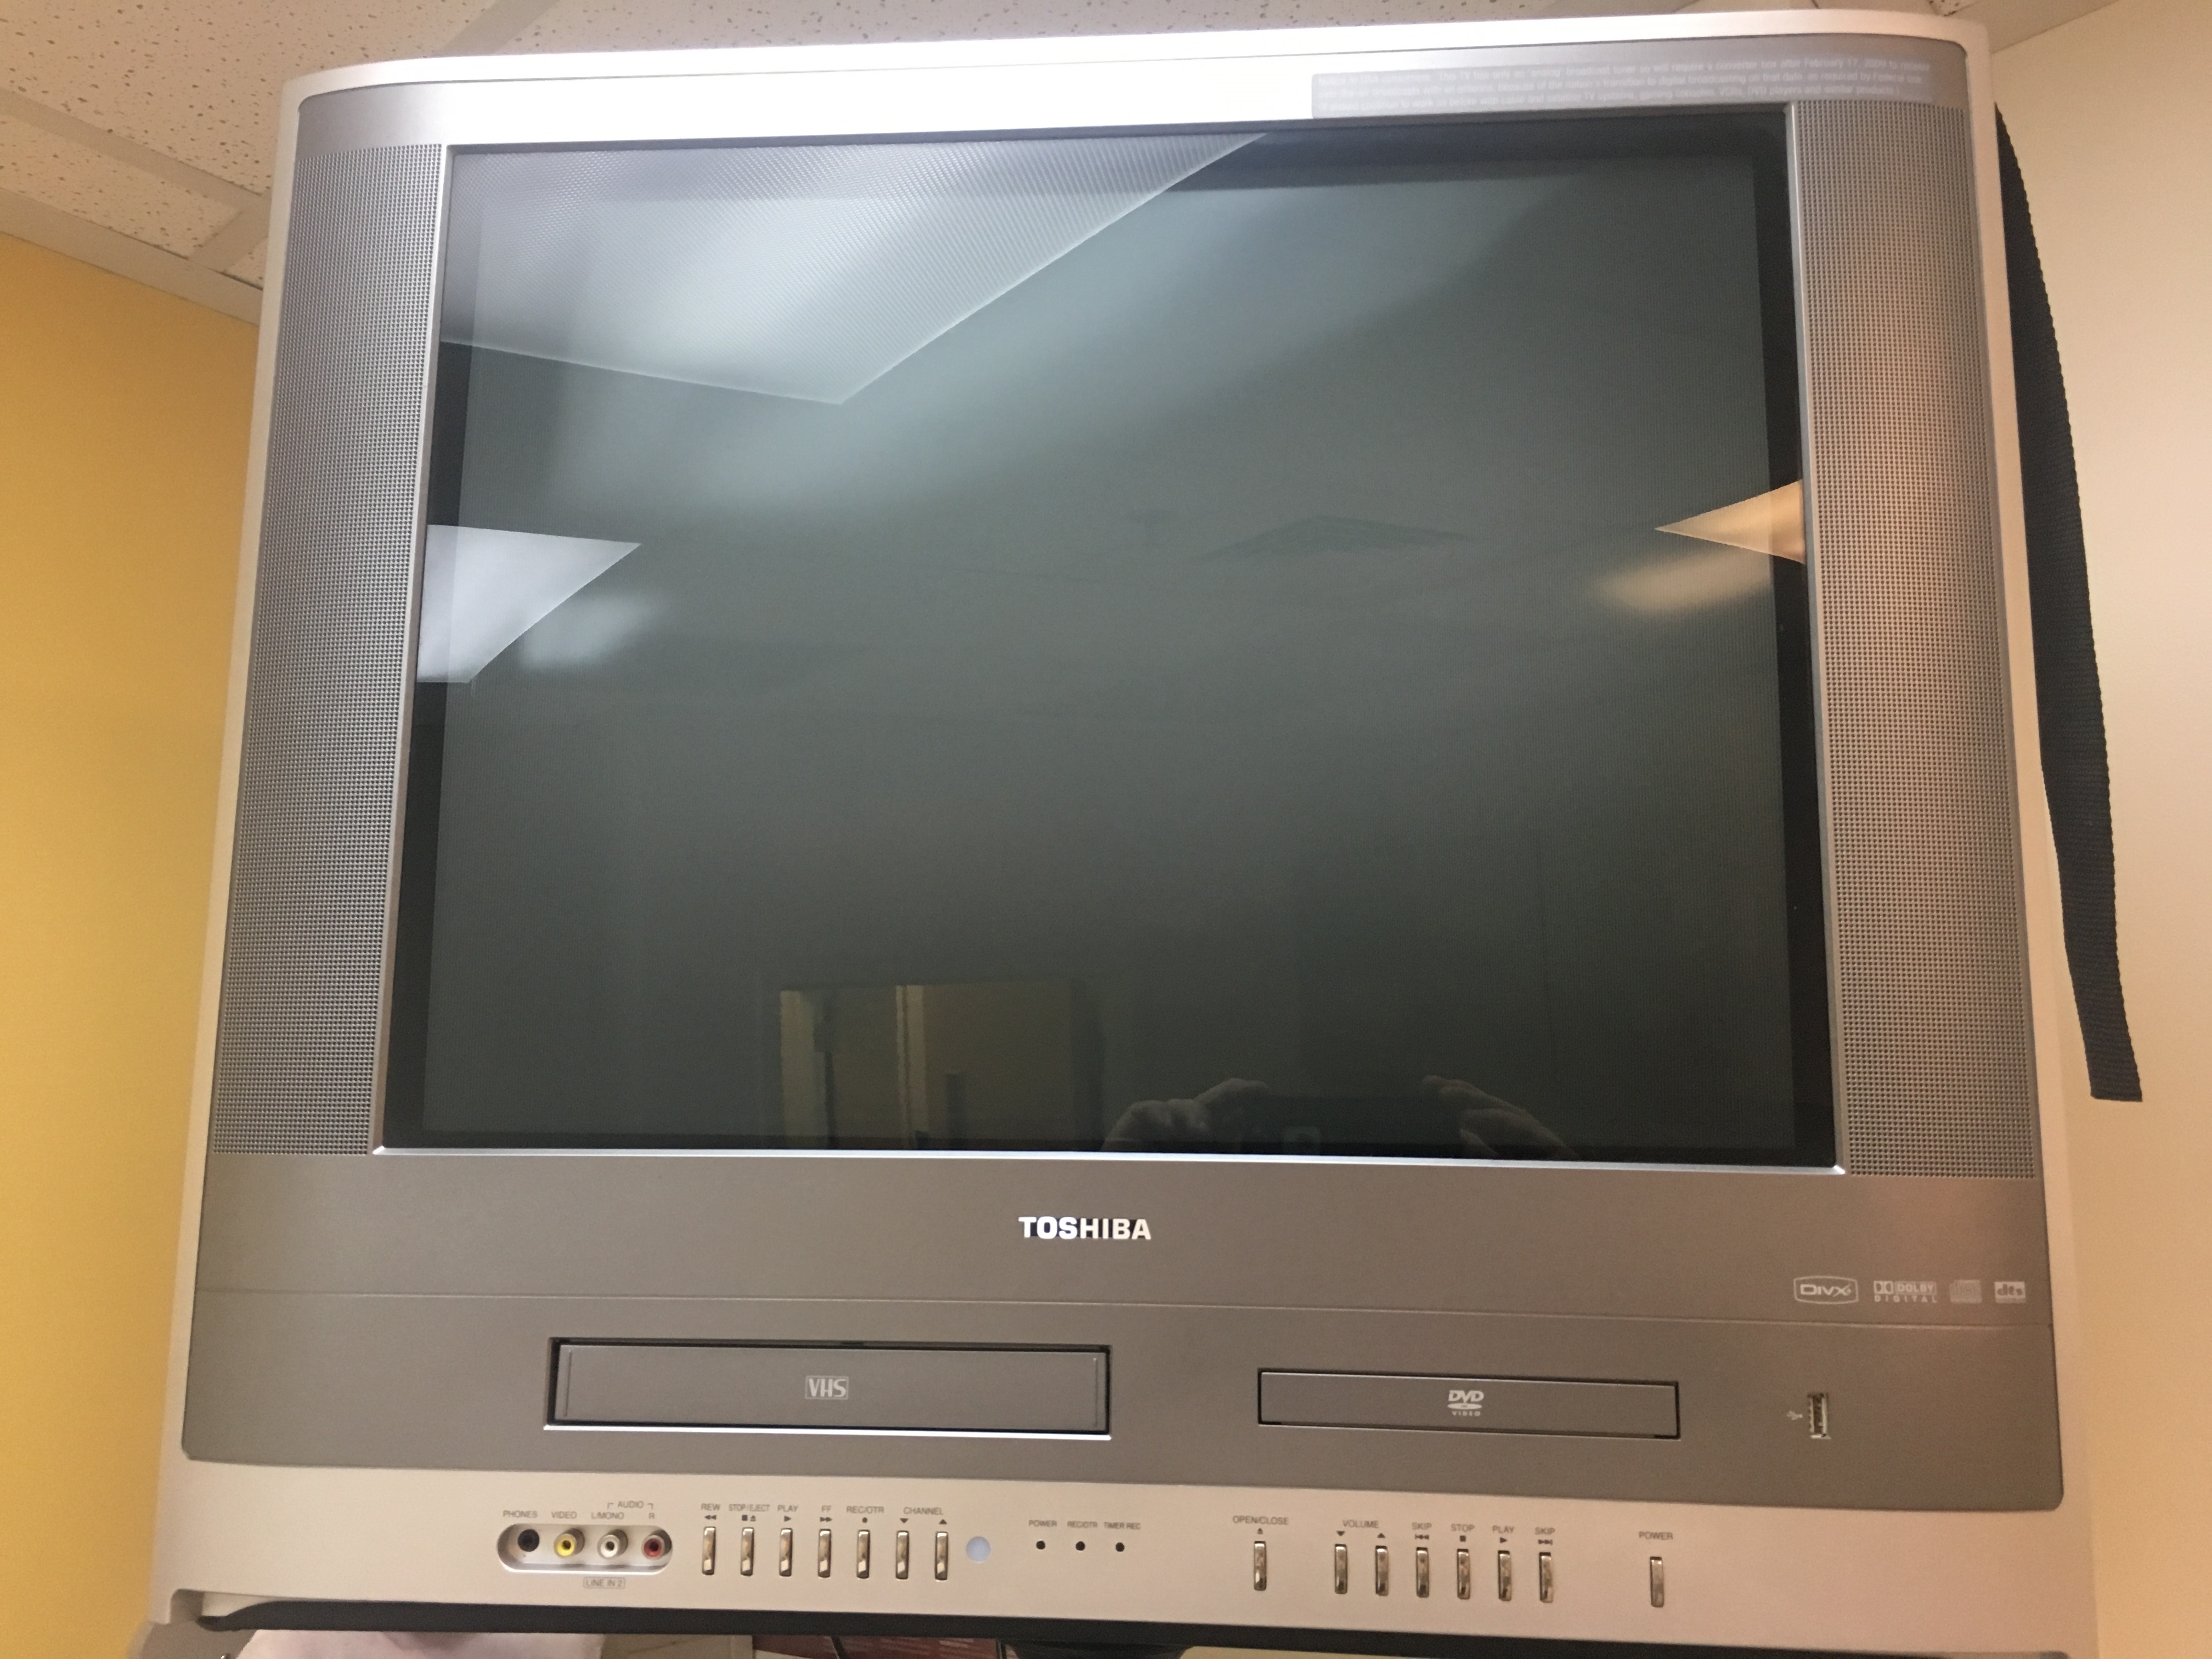 Toshiba Tv Vcr Dvd Combo Auction 1052